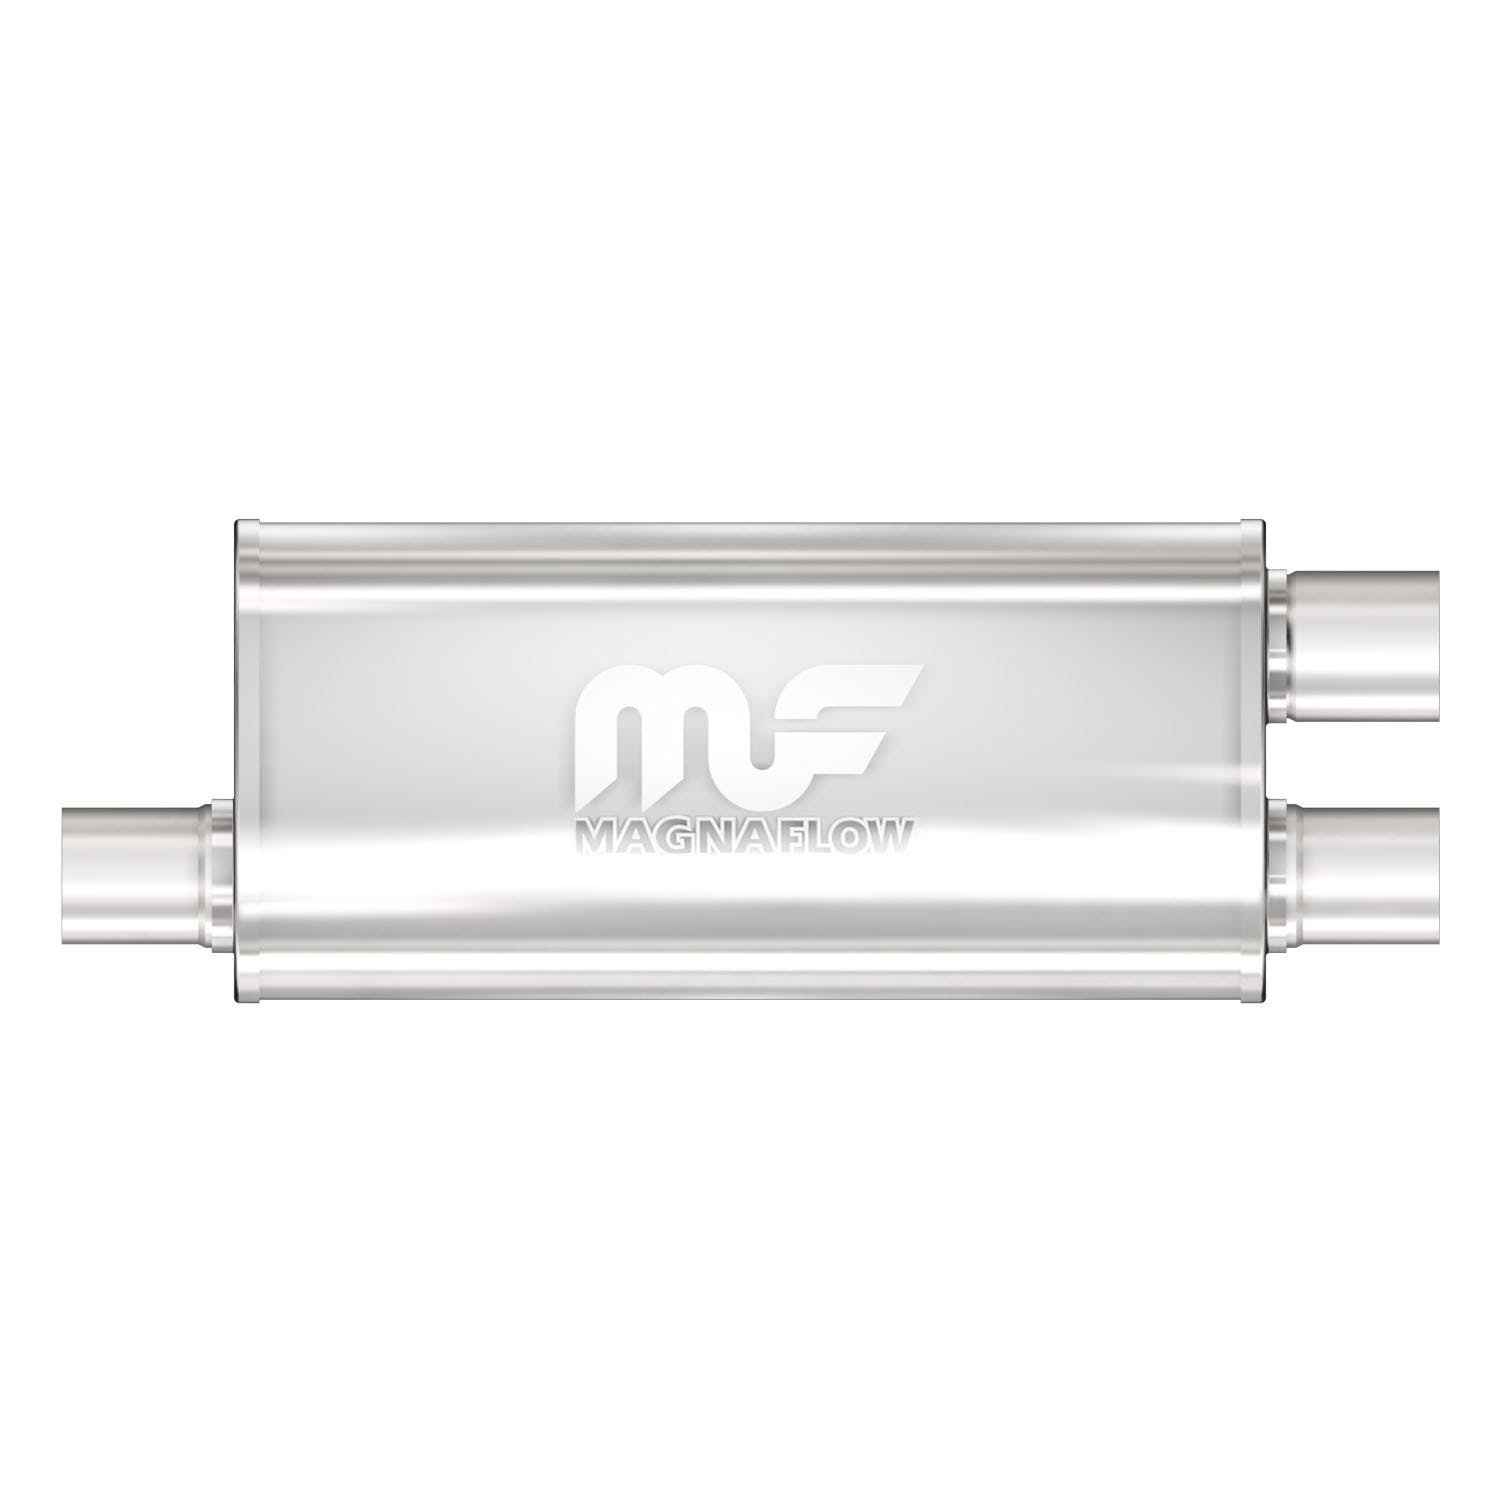 MagnaFlow Exhaust Products 14266 Universal Muffler